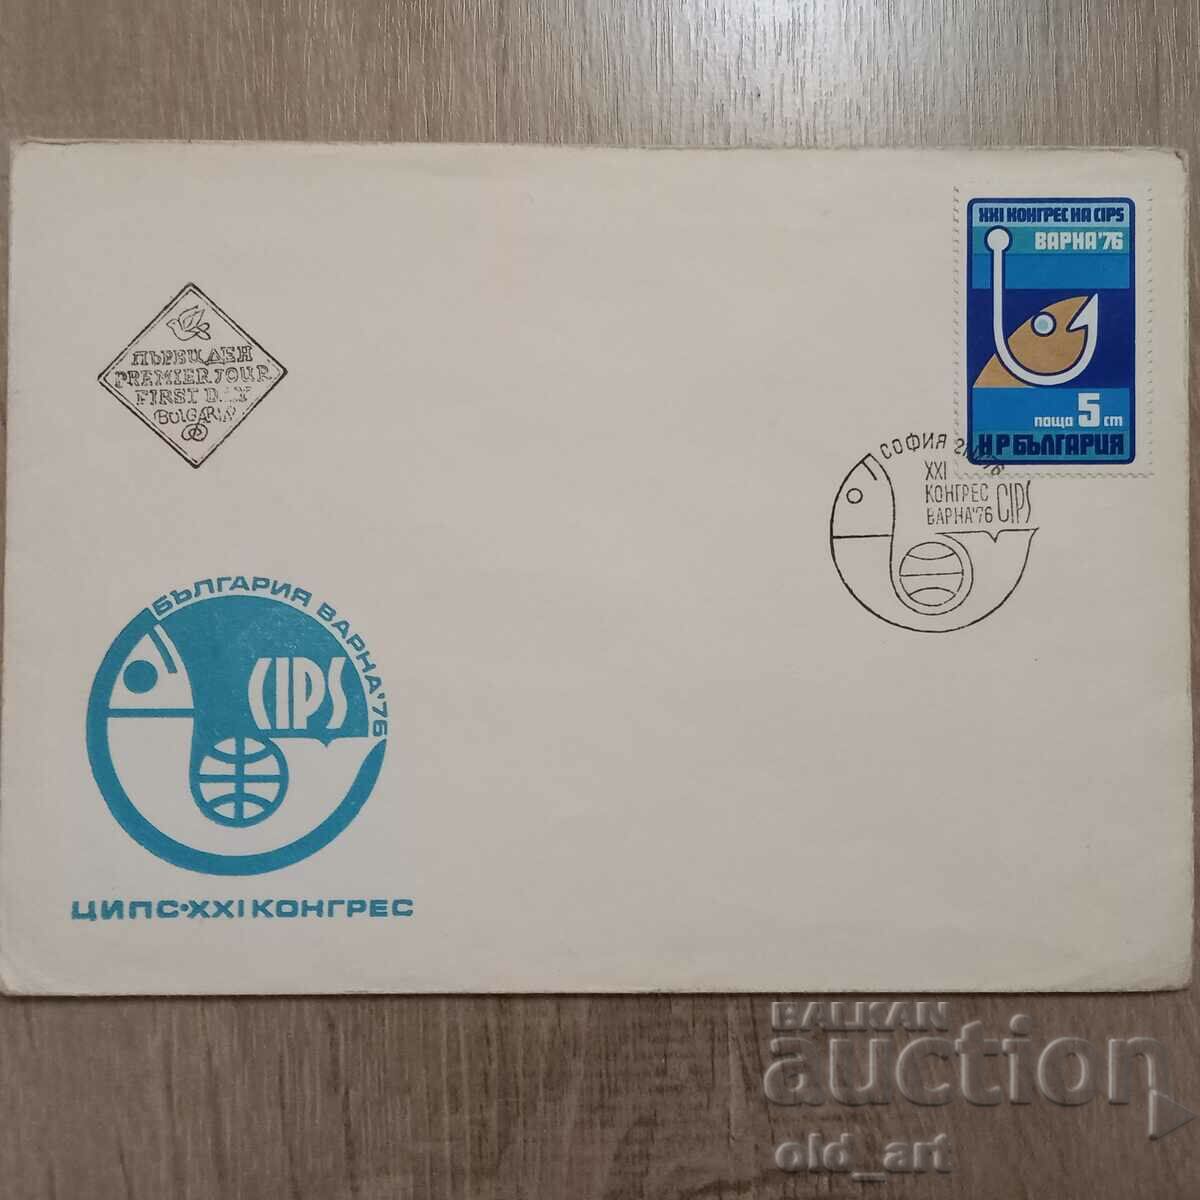 Postal envelope - XXI Congress of the CISS Varna 76